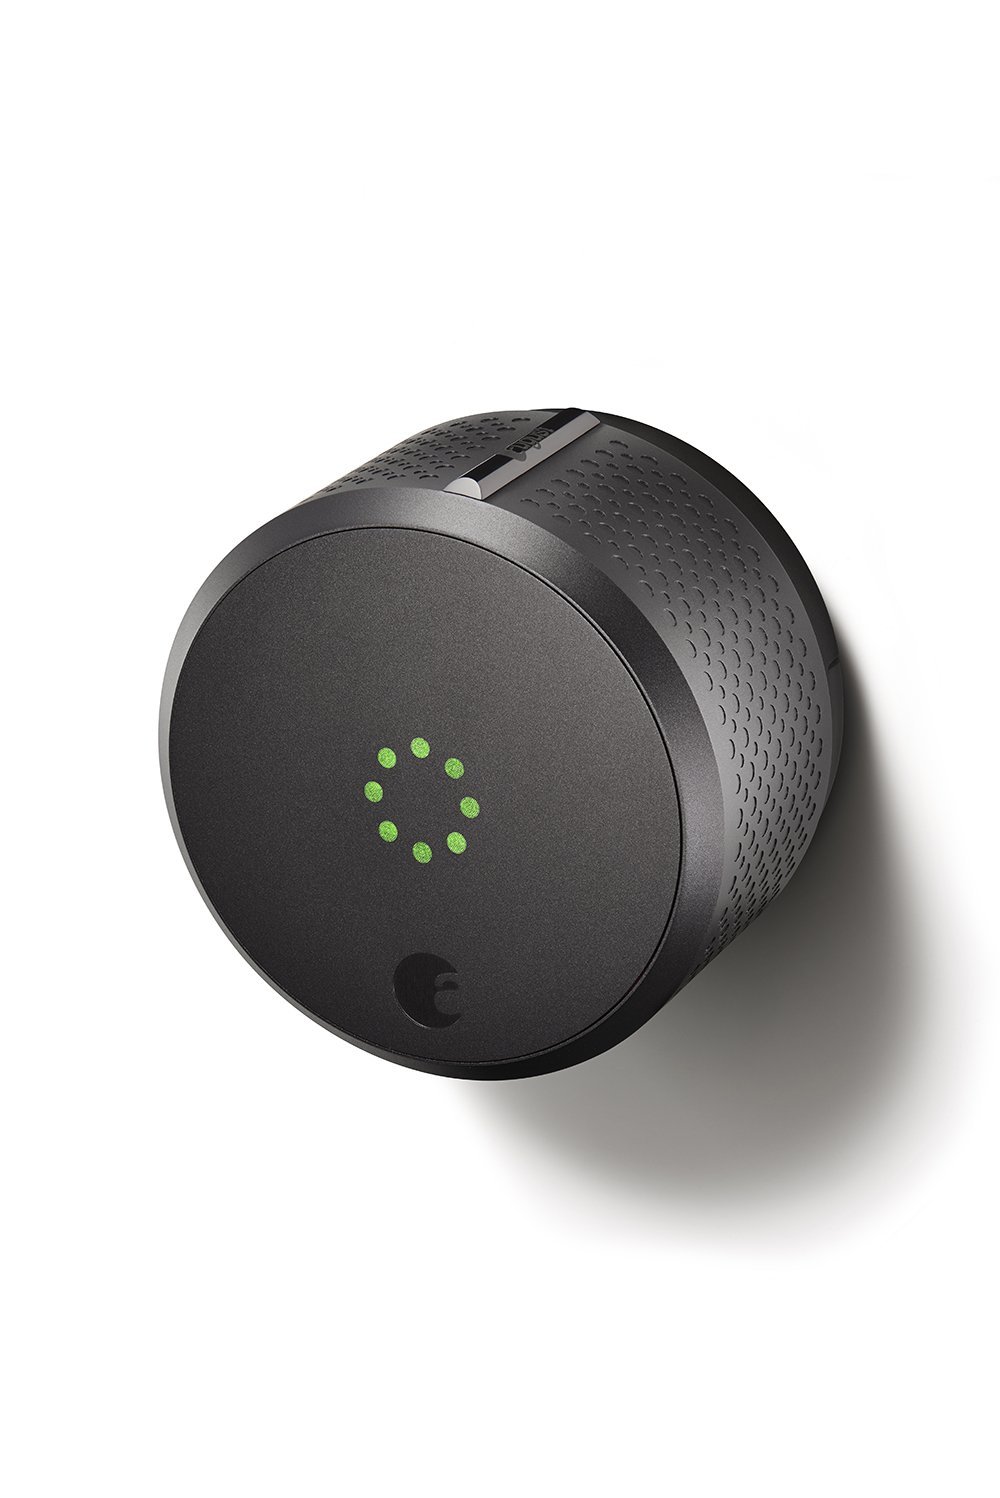 August Home Smart Lock 2nd Generation - Dark Gray, Works with Alexa (ASL-02) 1